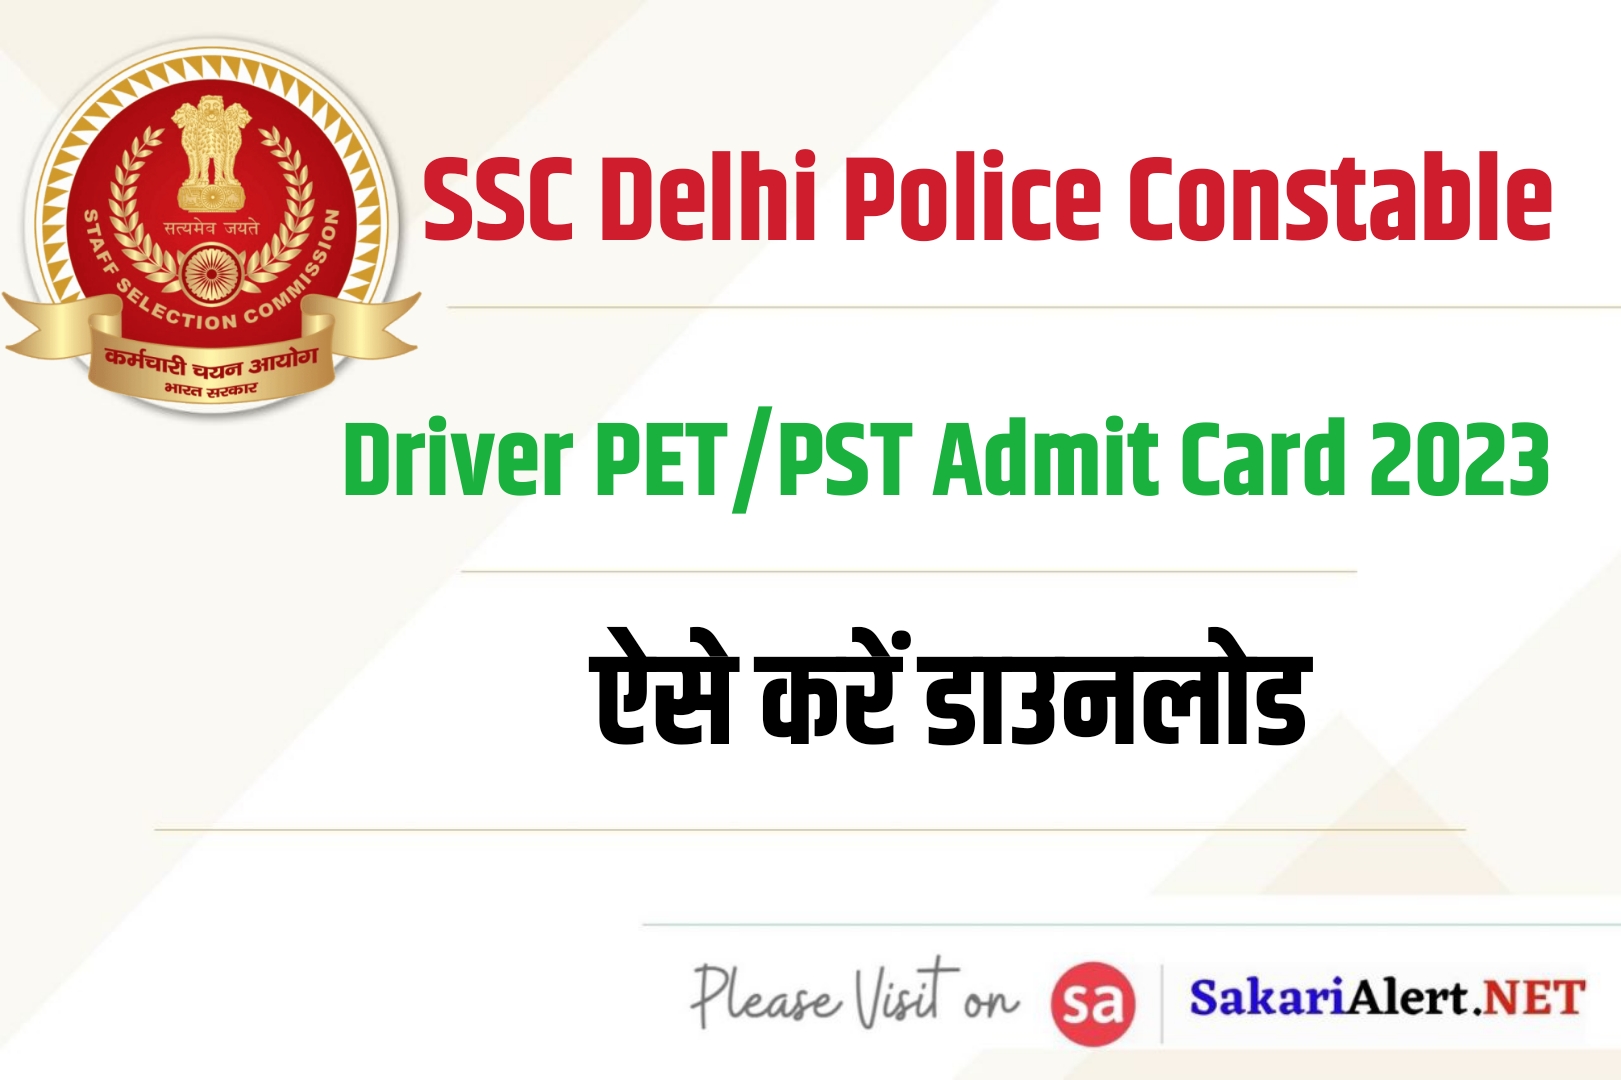 SSC Delhi Police Constable Driver PET/PST Admit Card 2022